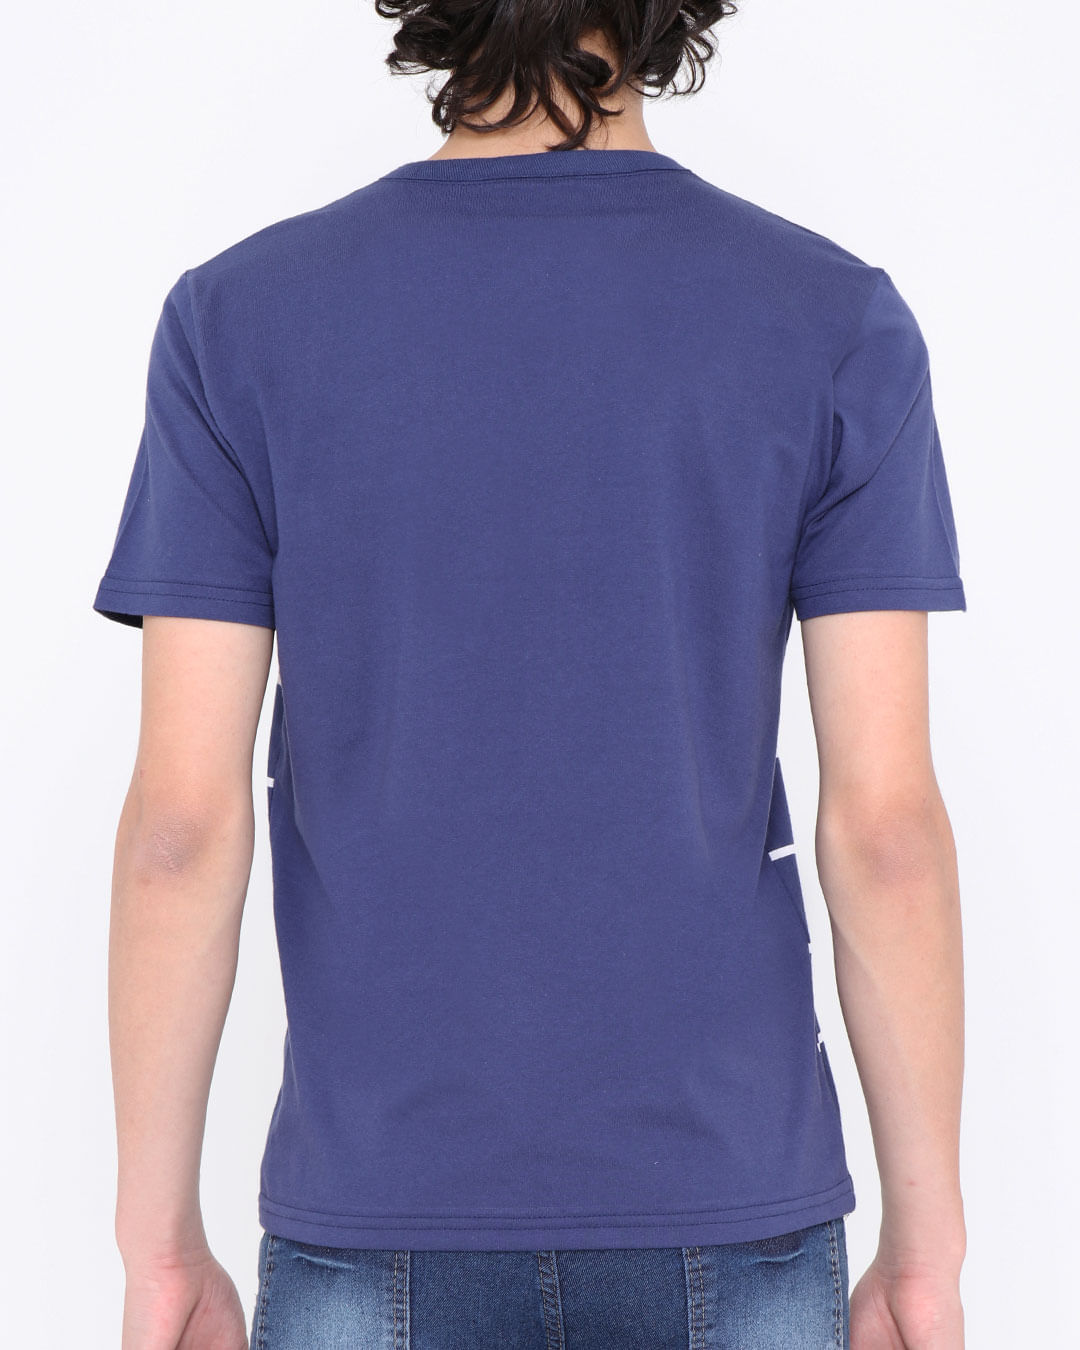 Camiseta-Juvenil-Manga-Curta-Listrada-Azul